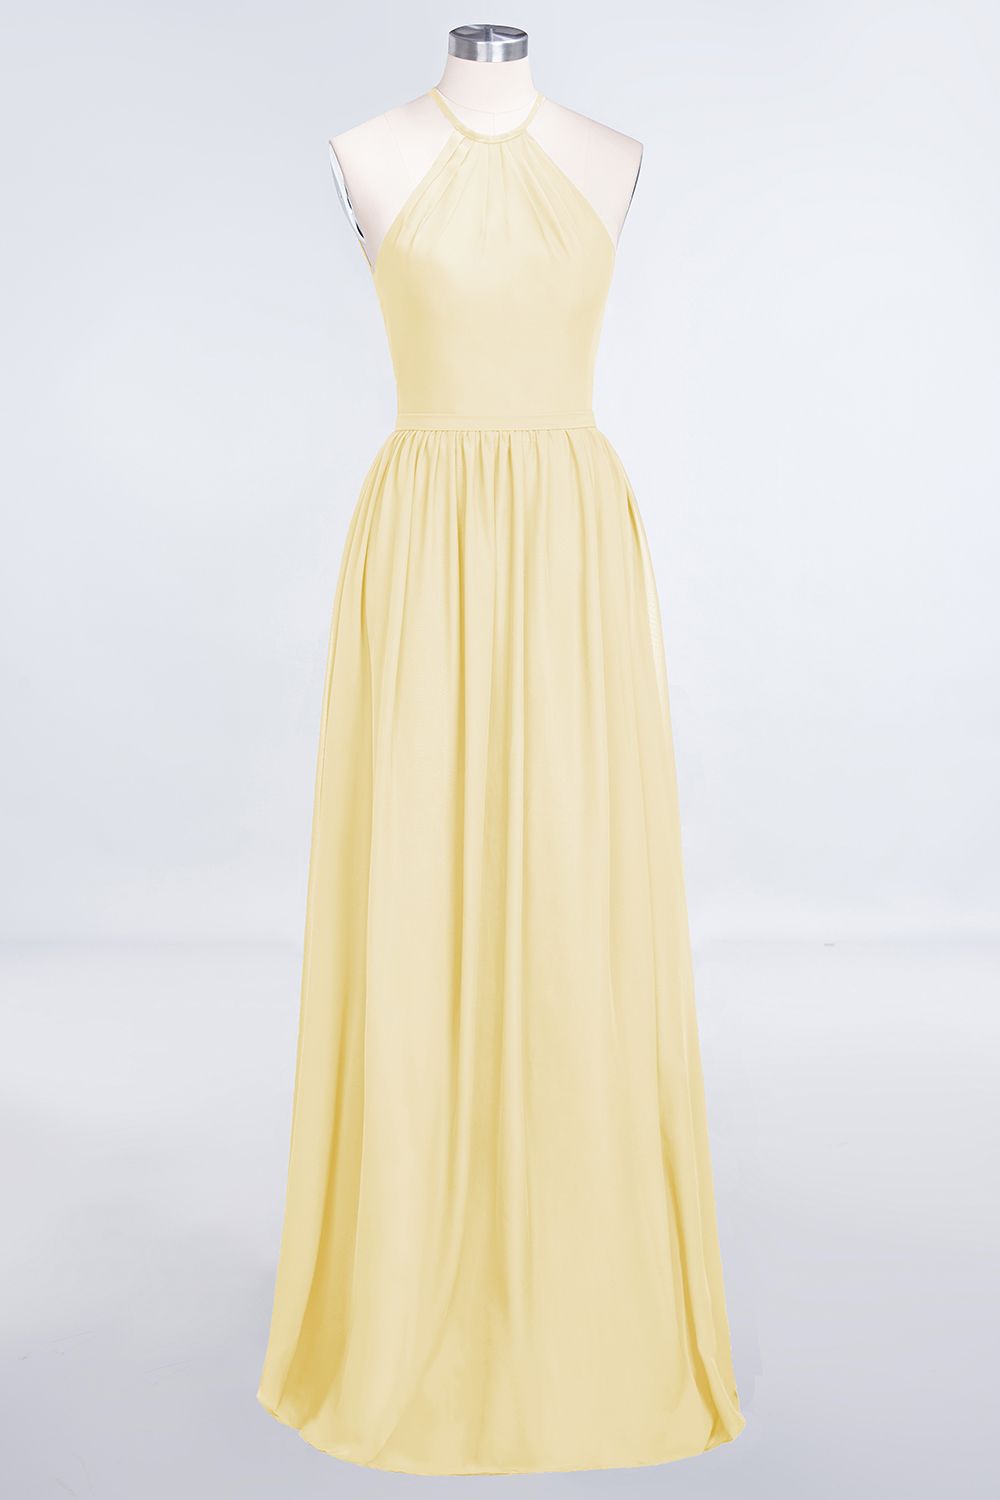 Affordable Halter Sleeveless Long Burgundy Bridesmaid Dress with Ruffle-27dress